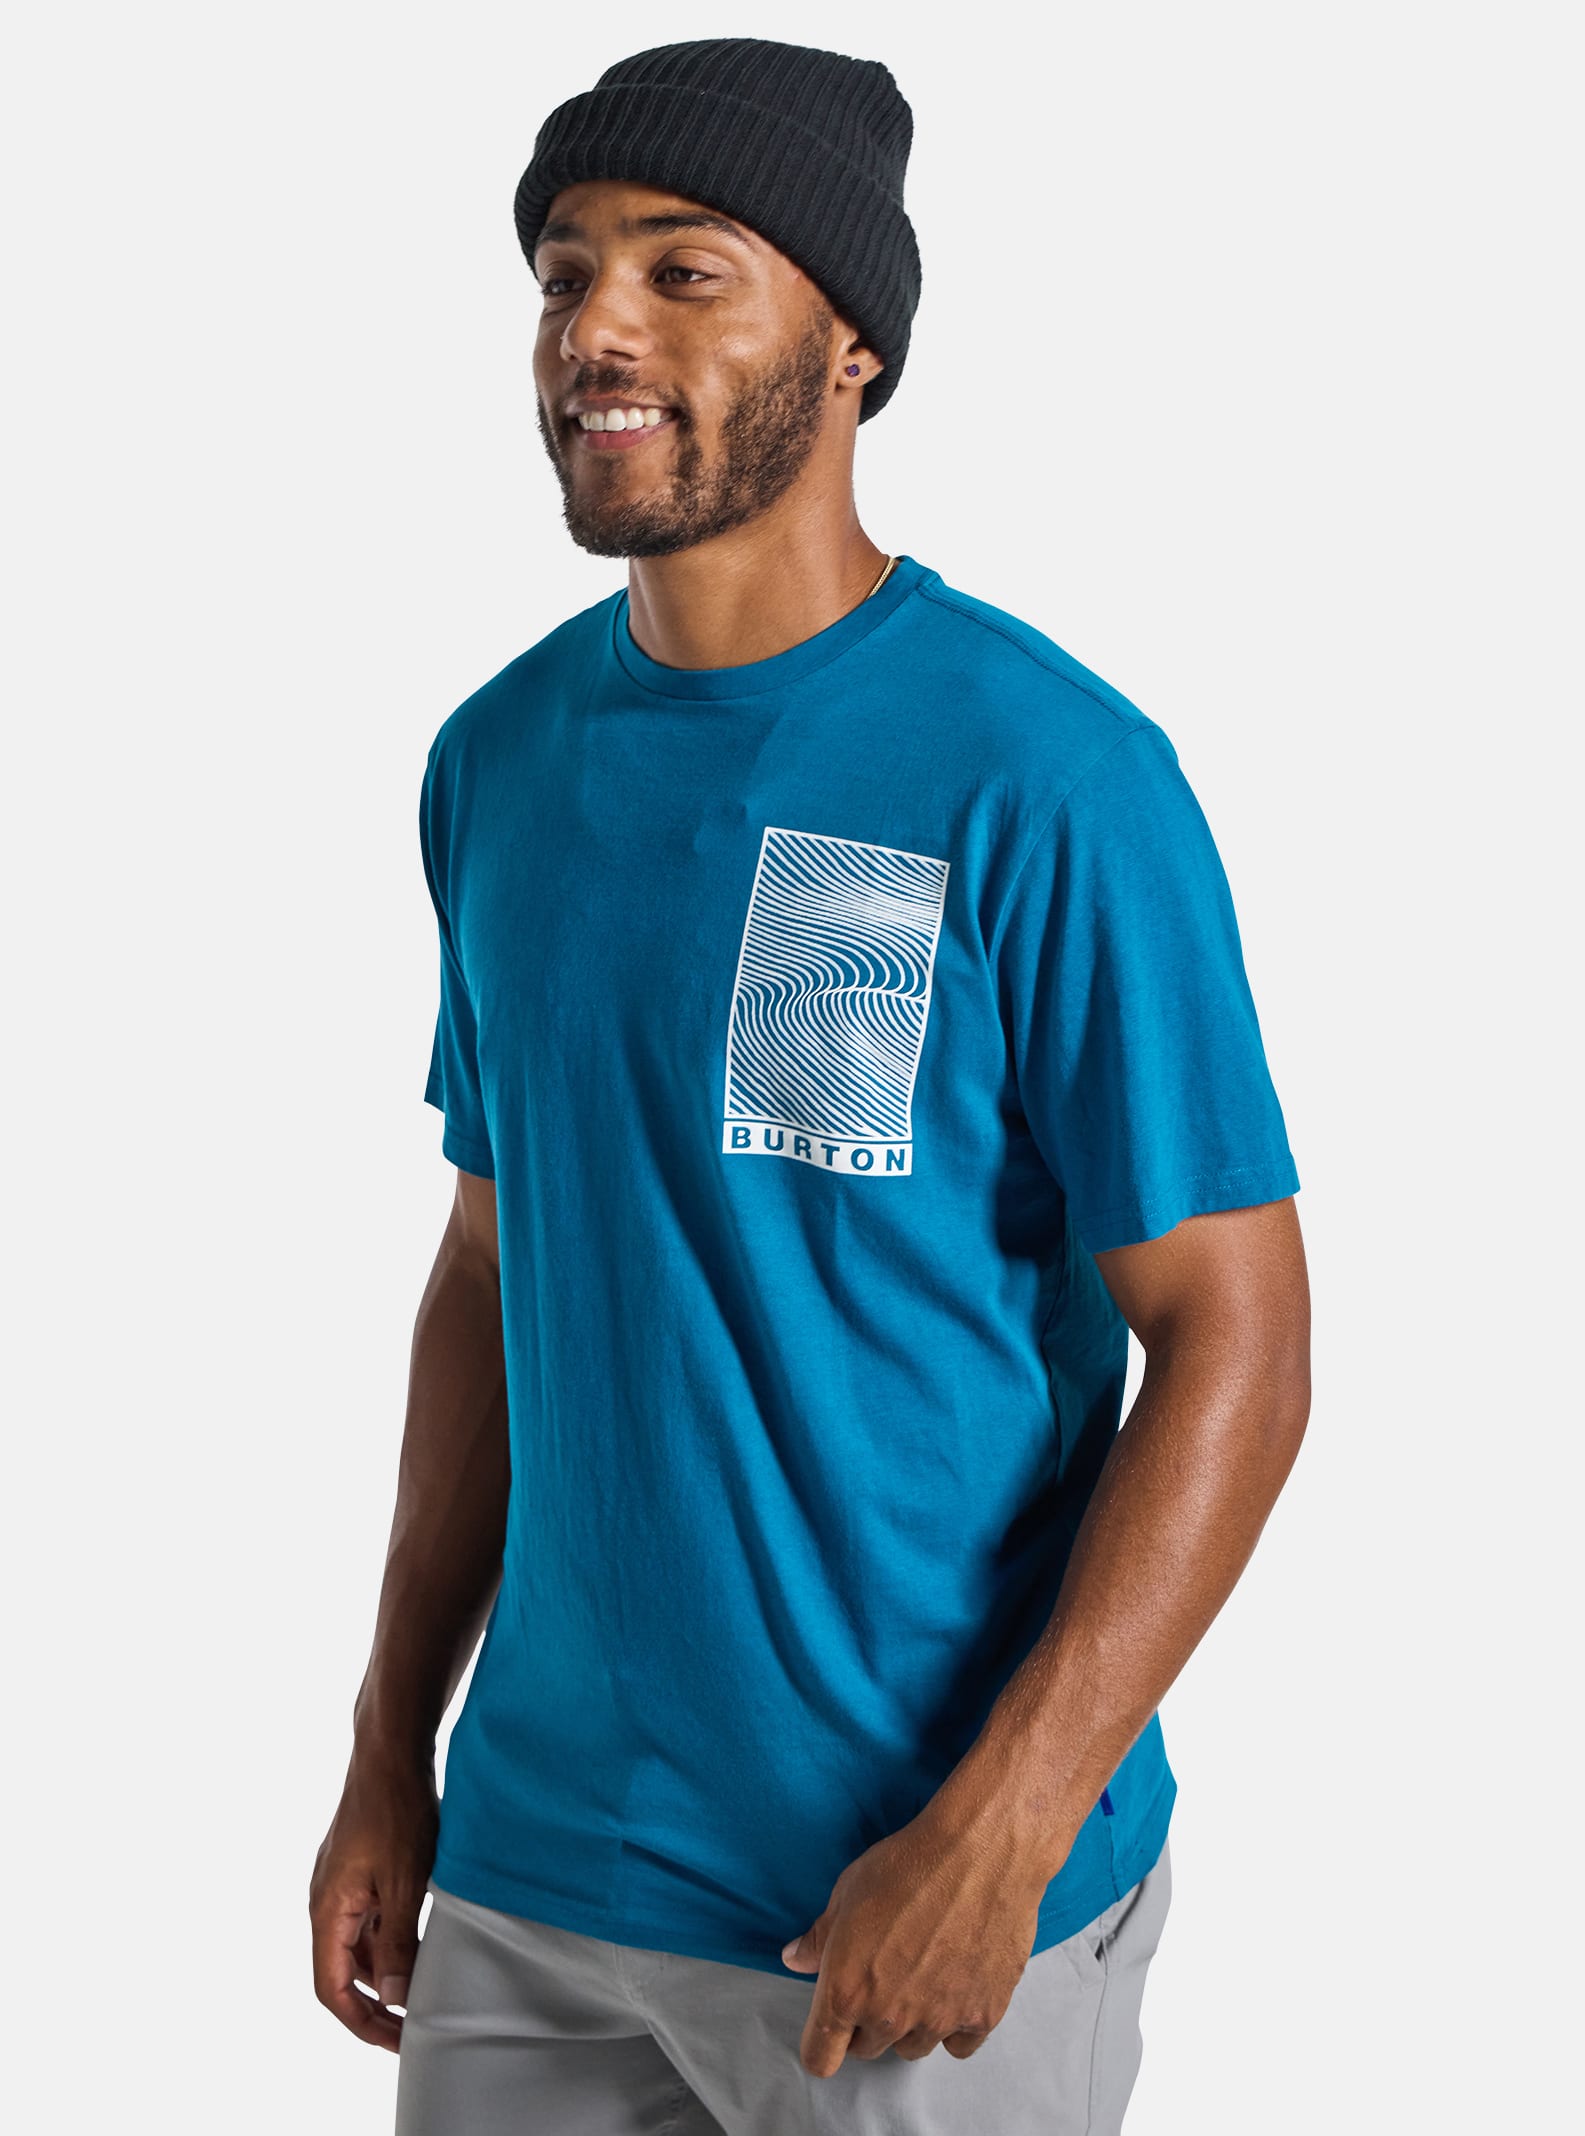 Men's Snowboard T-Shirts | Burton Snowboards GB